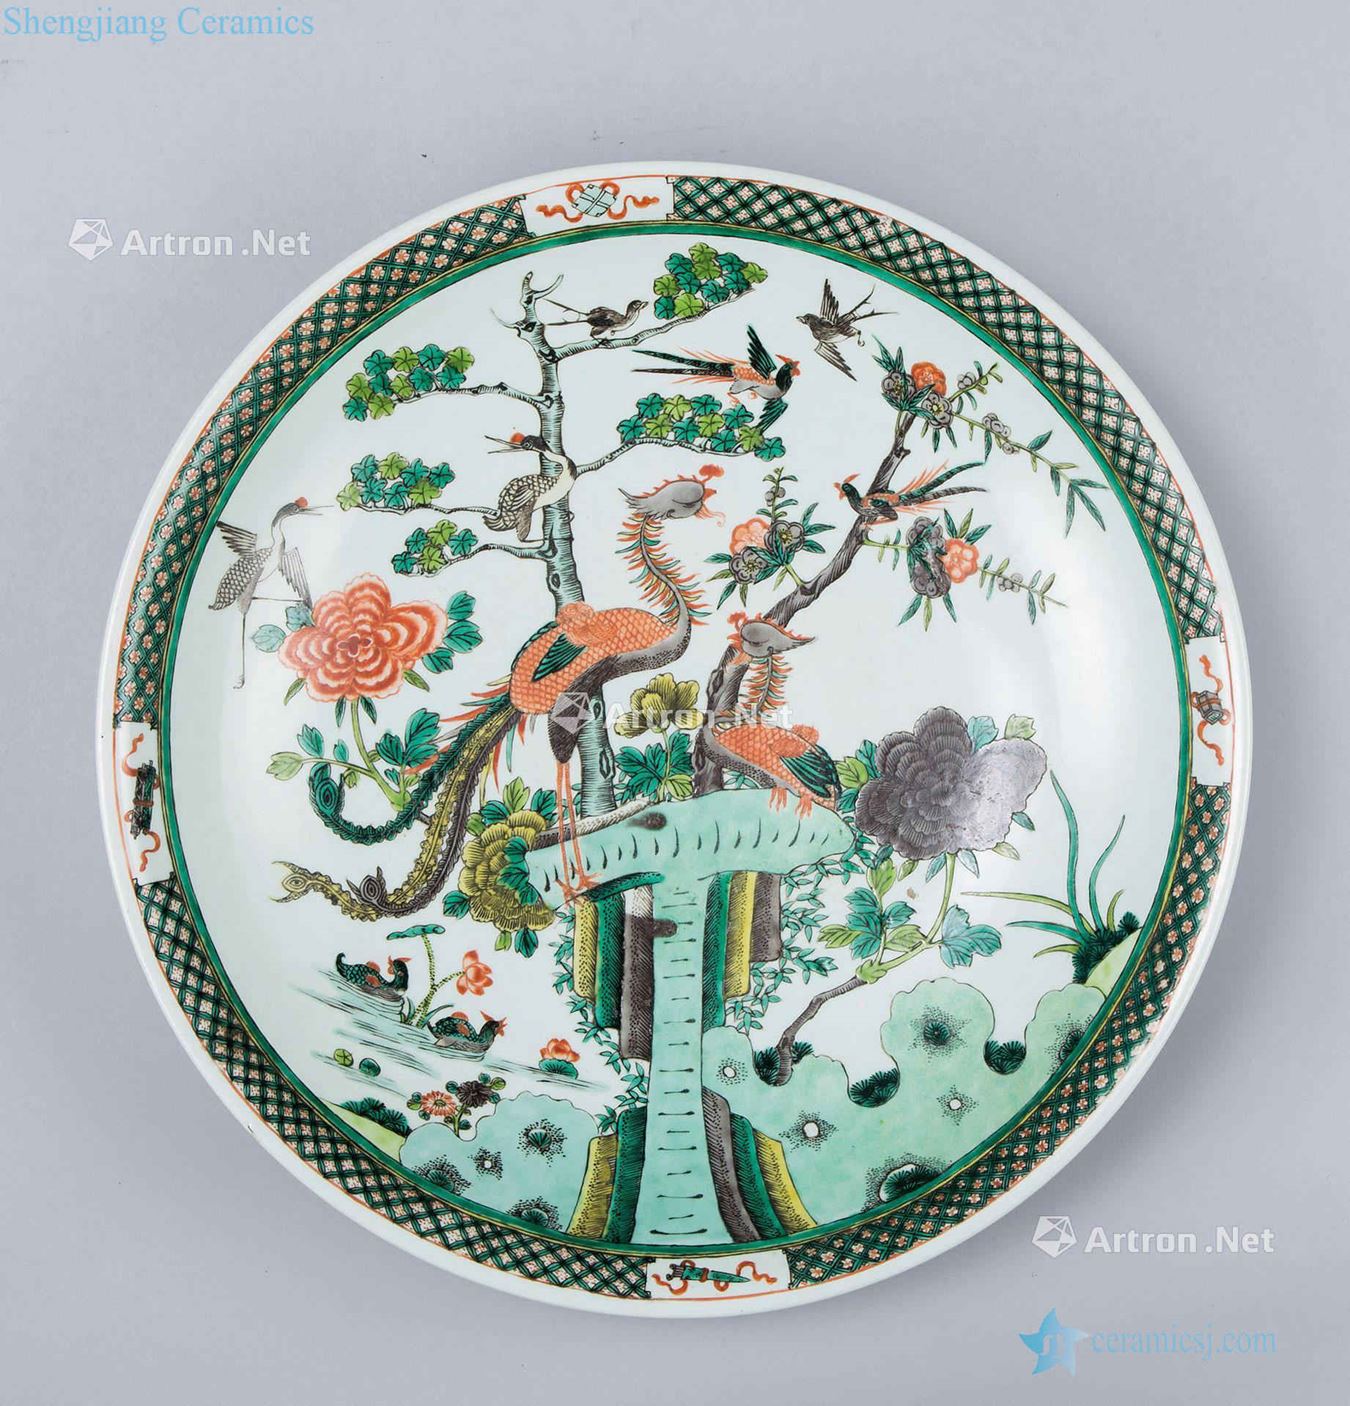 In the qing dynasty (1644-1911), the double phoenix flower grain market